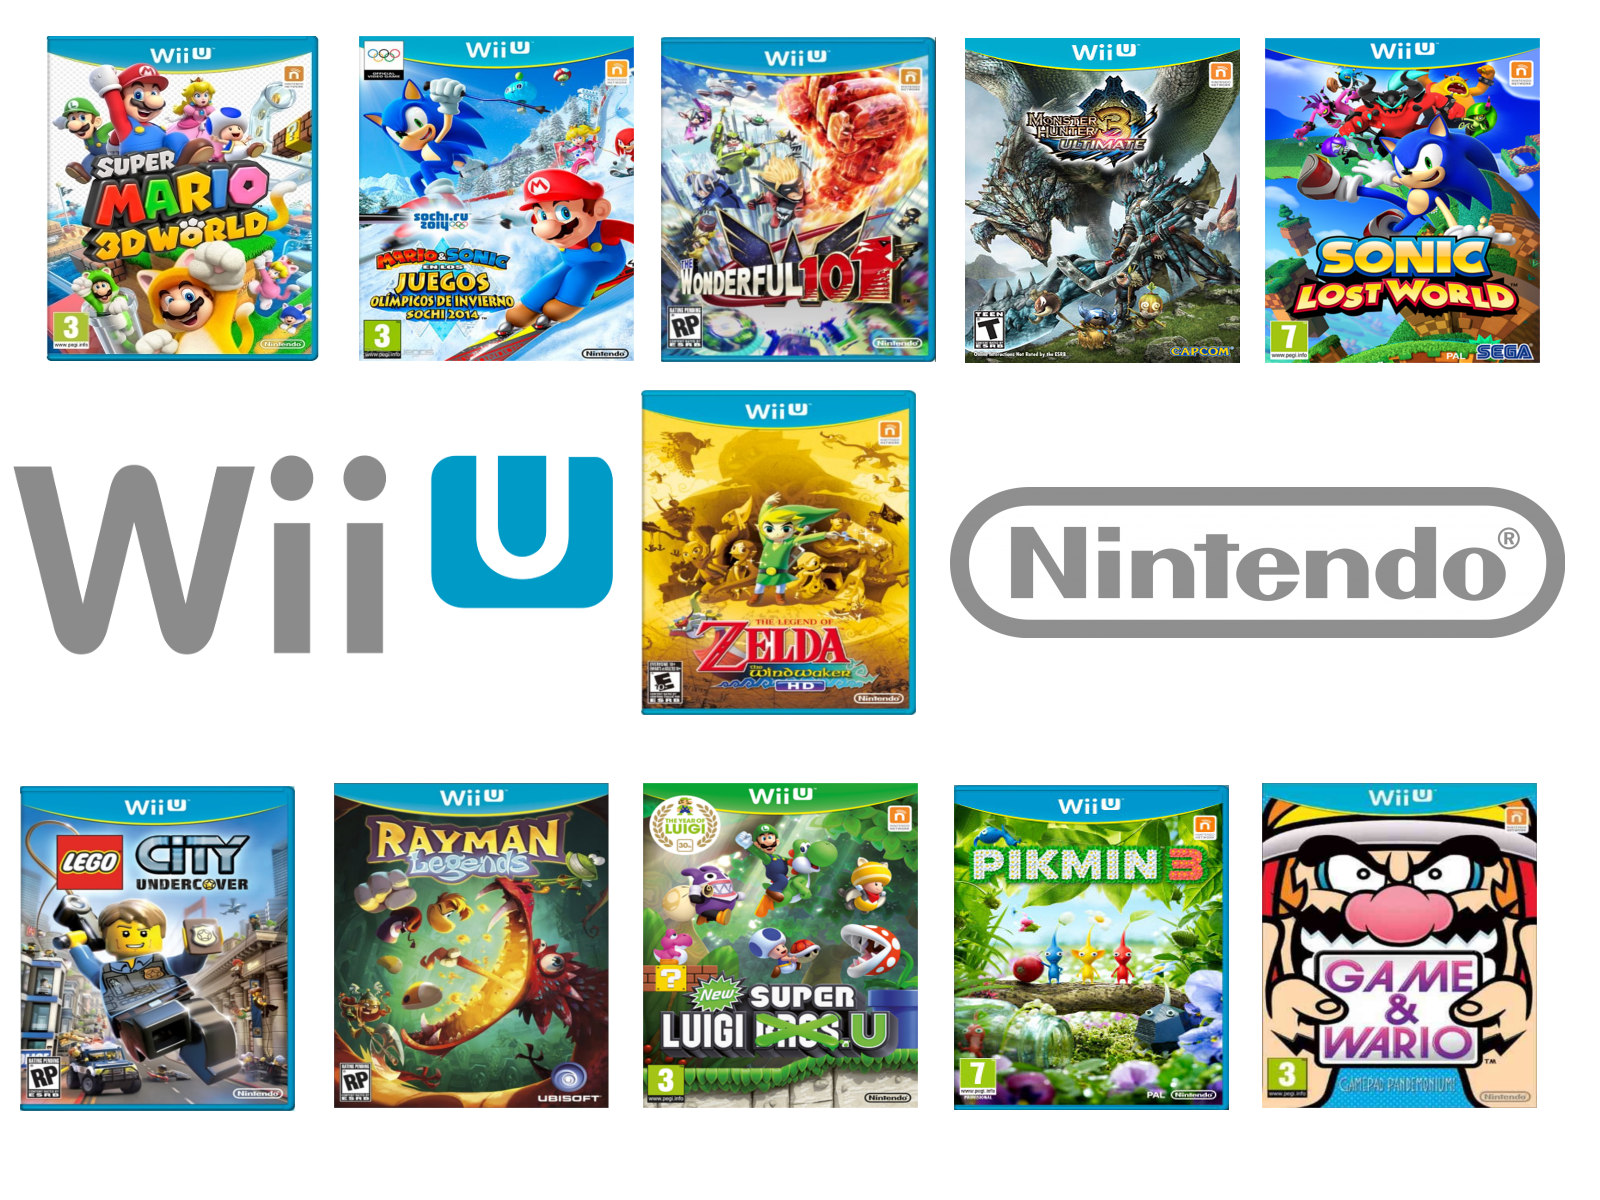 Guia Definitiva Juegos Wii U 2012 2017 Nintendo Wii U 3djuegos